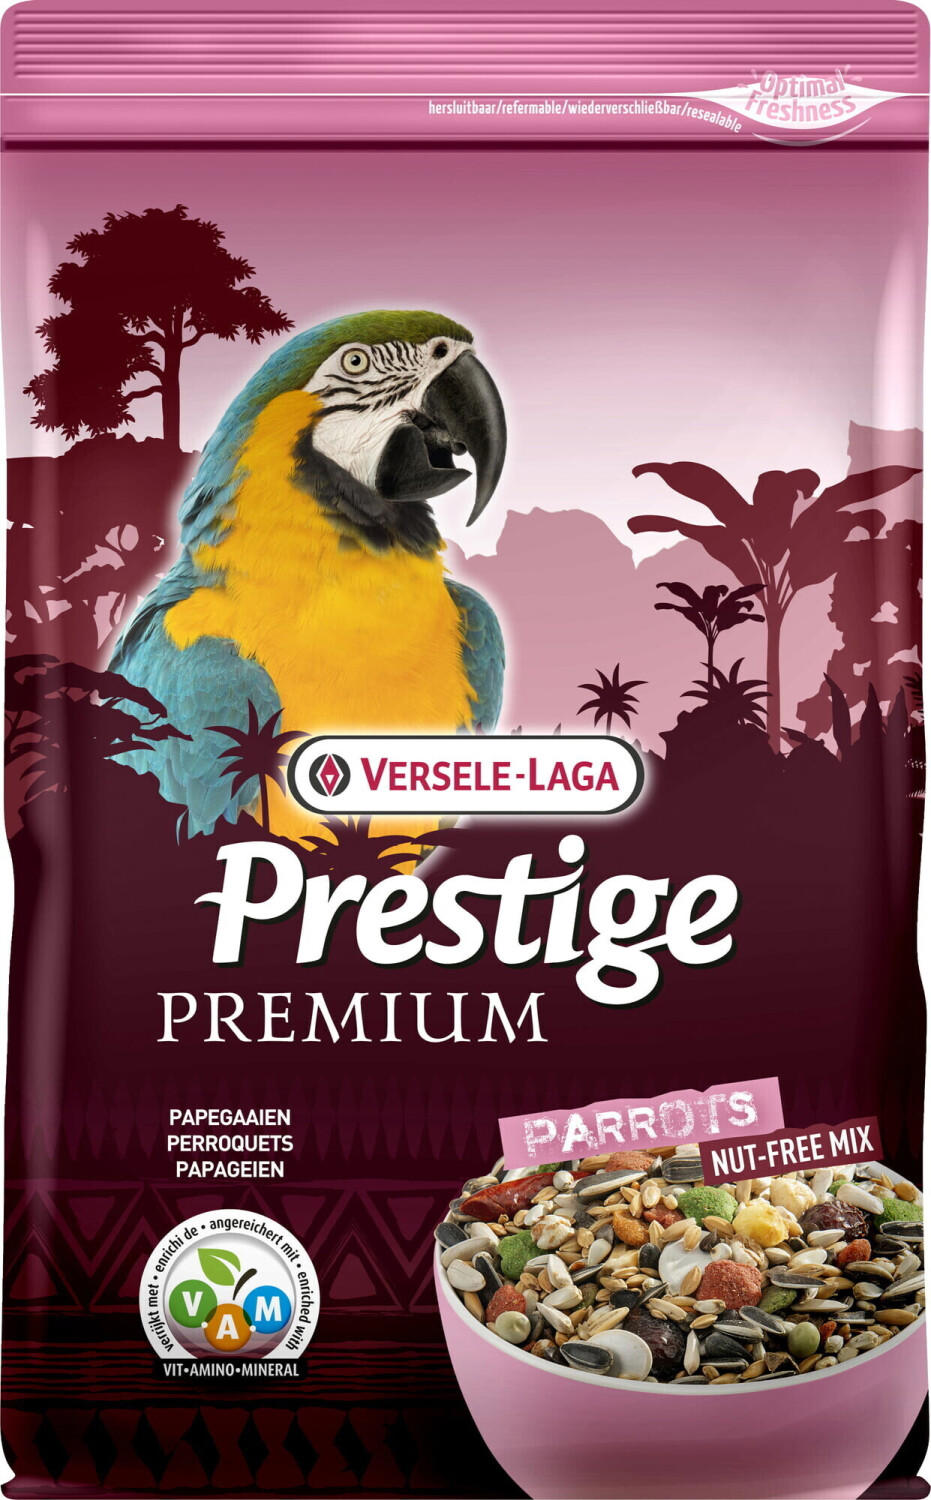 Versele-Laga Prestige Premium parrots nut free mix 2kg